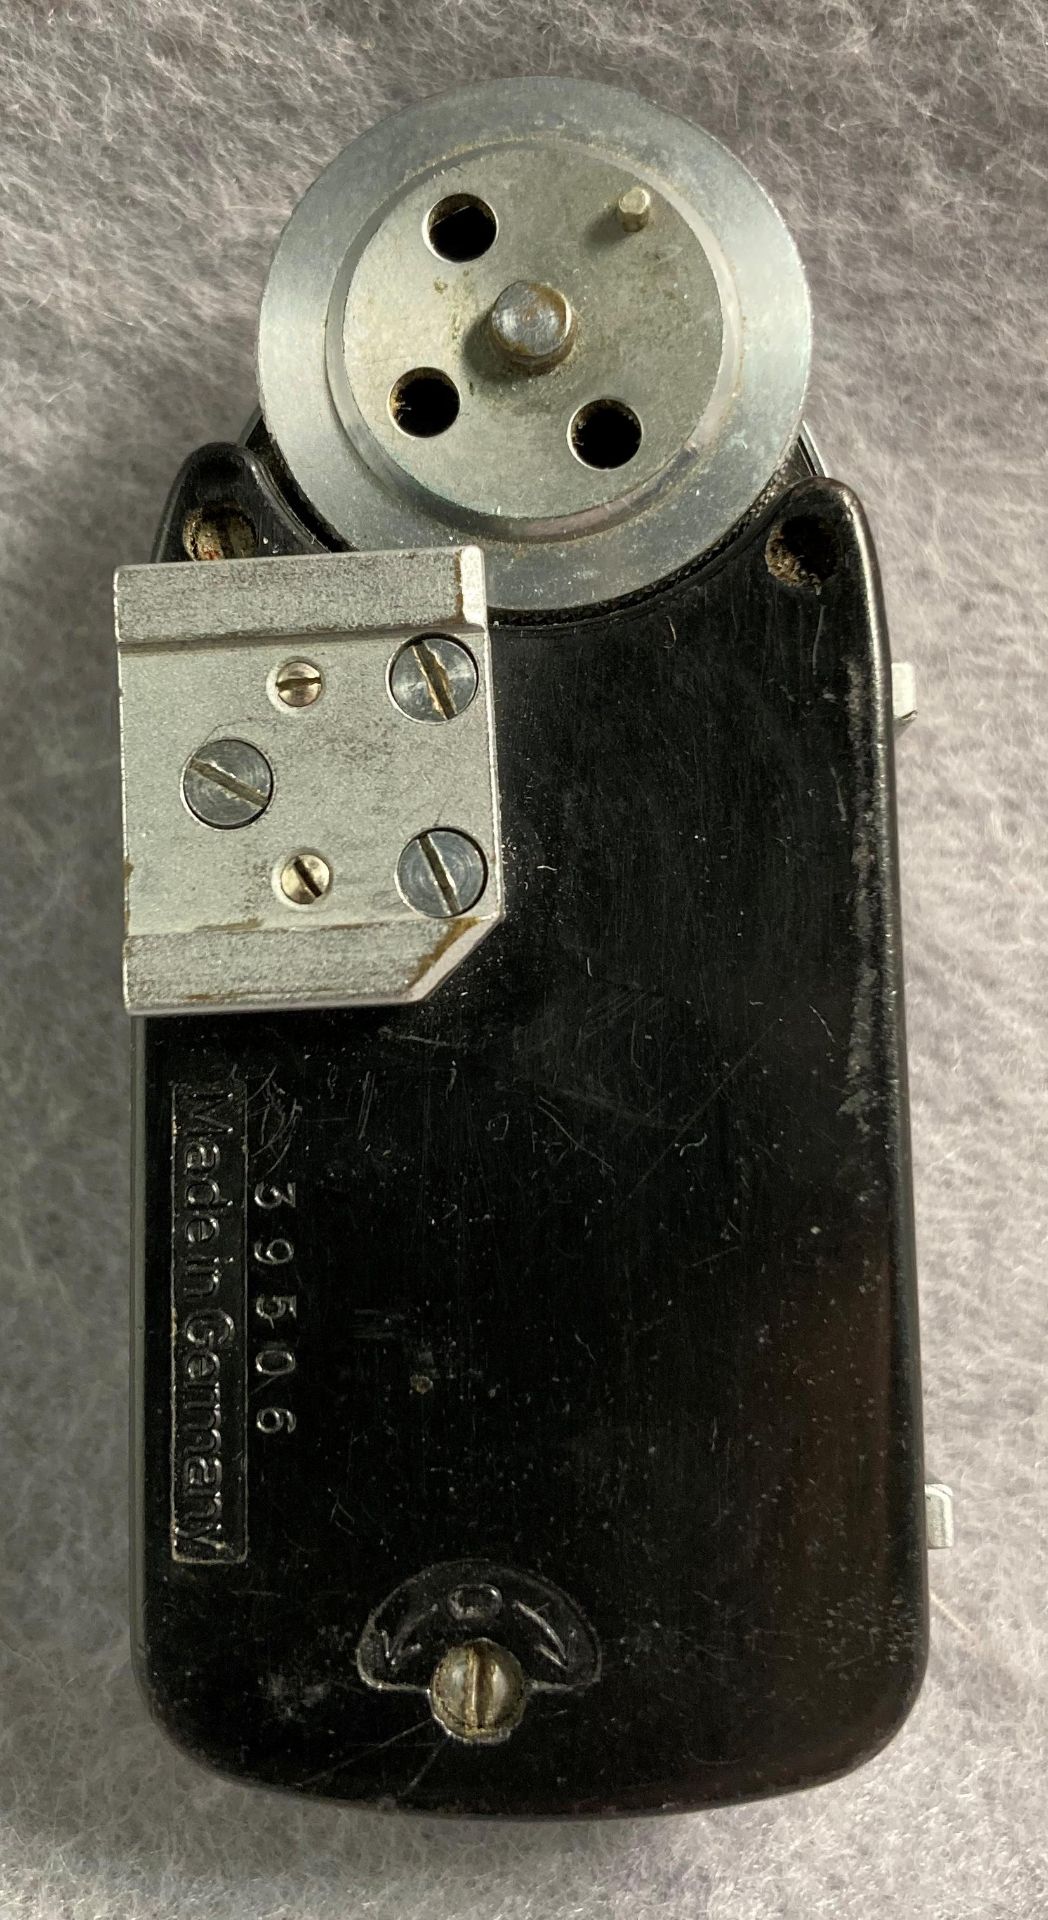 Leica MC light meter (Saleroom location: S3 Counter) - Image 3 of 3